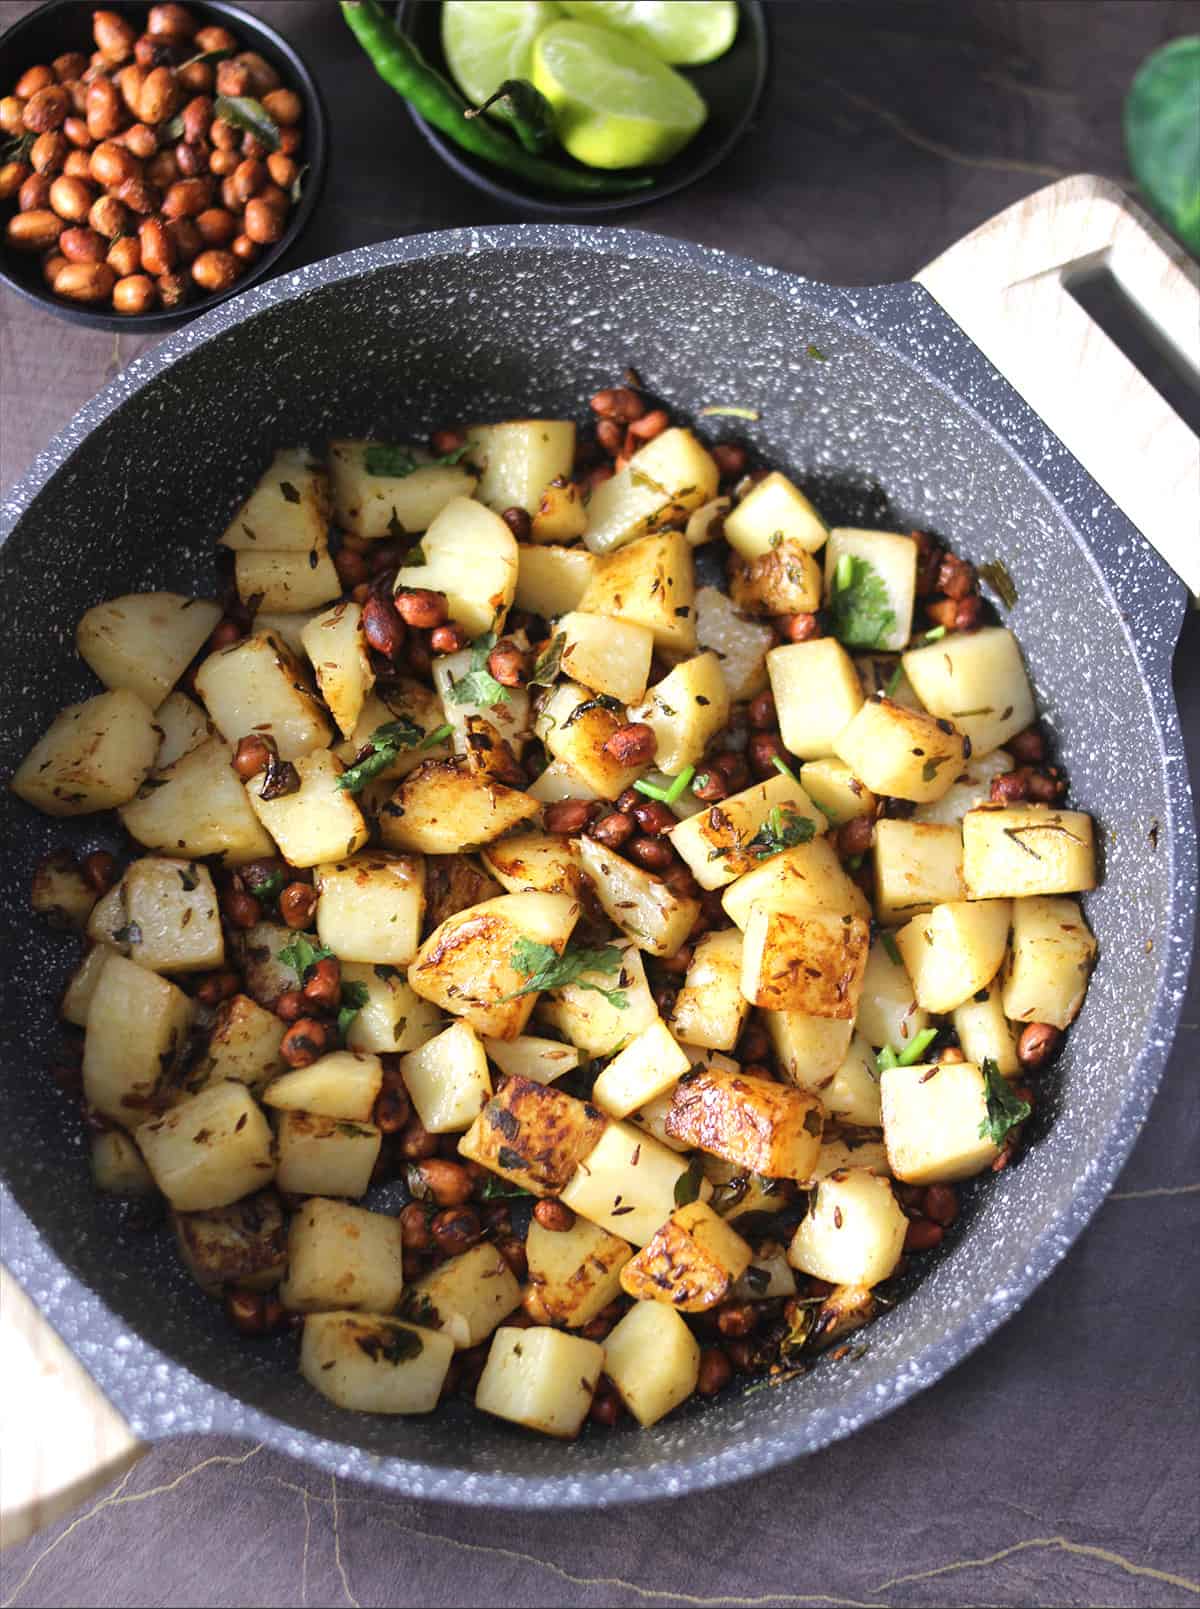 Vrat wale aloo or crispy pan roasted potato fry for Navratri fasting, vrat, upvas